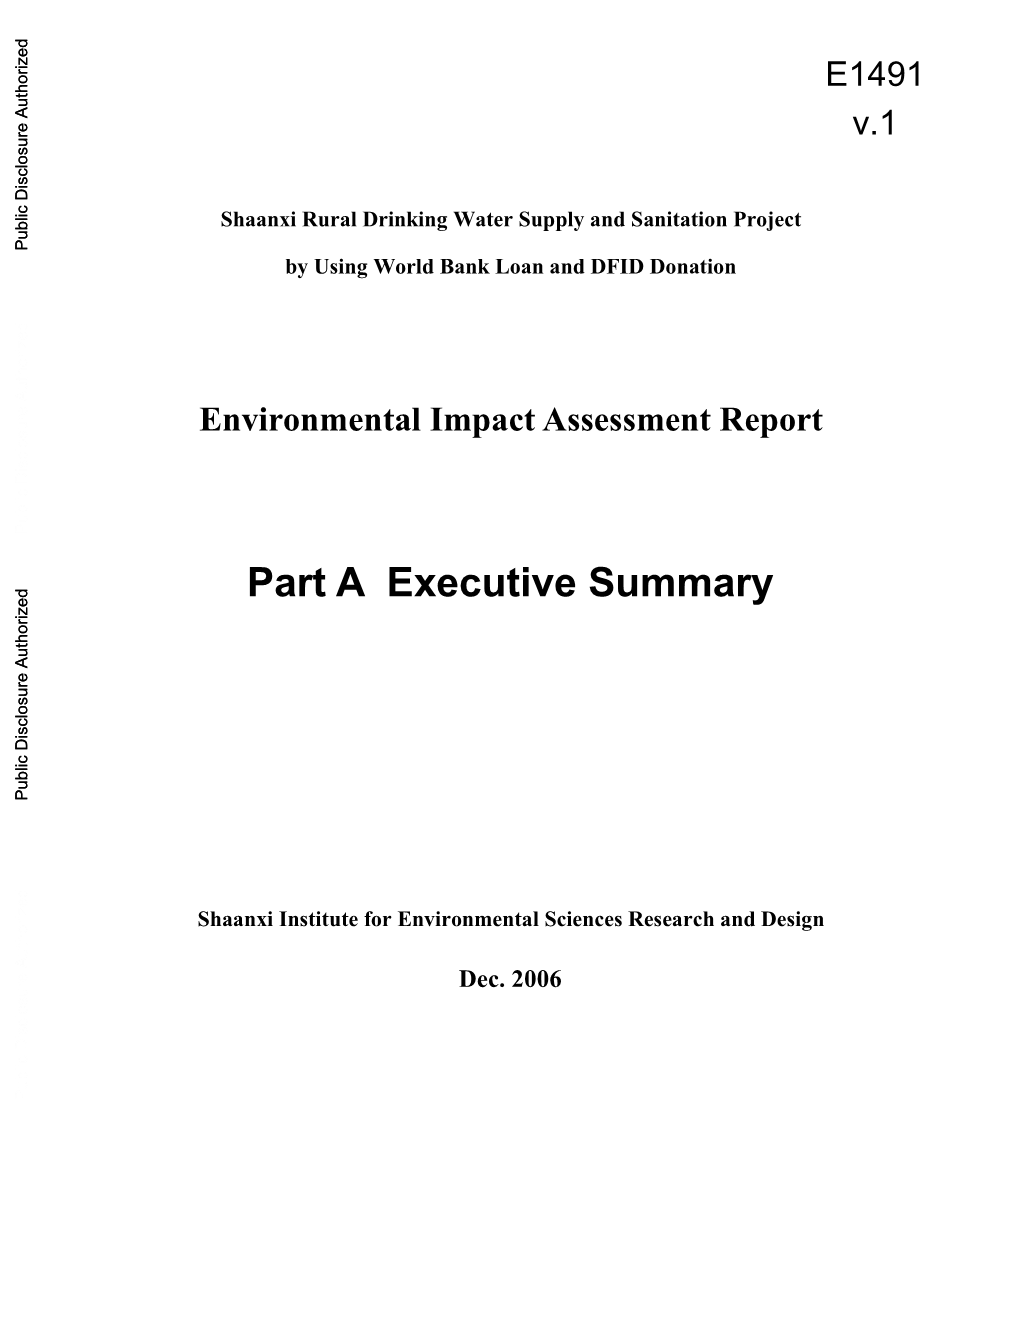 Environmental Impact Assessment Report Part